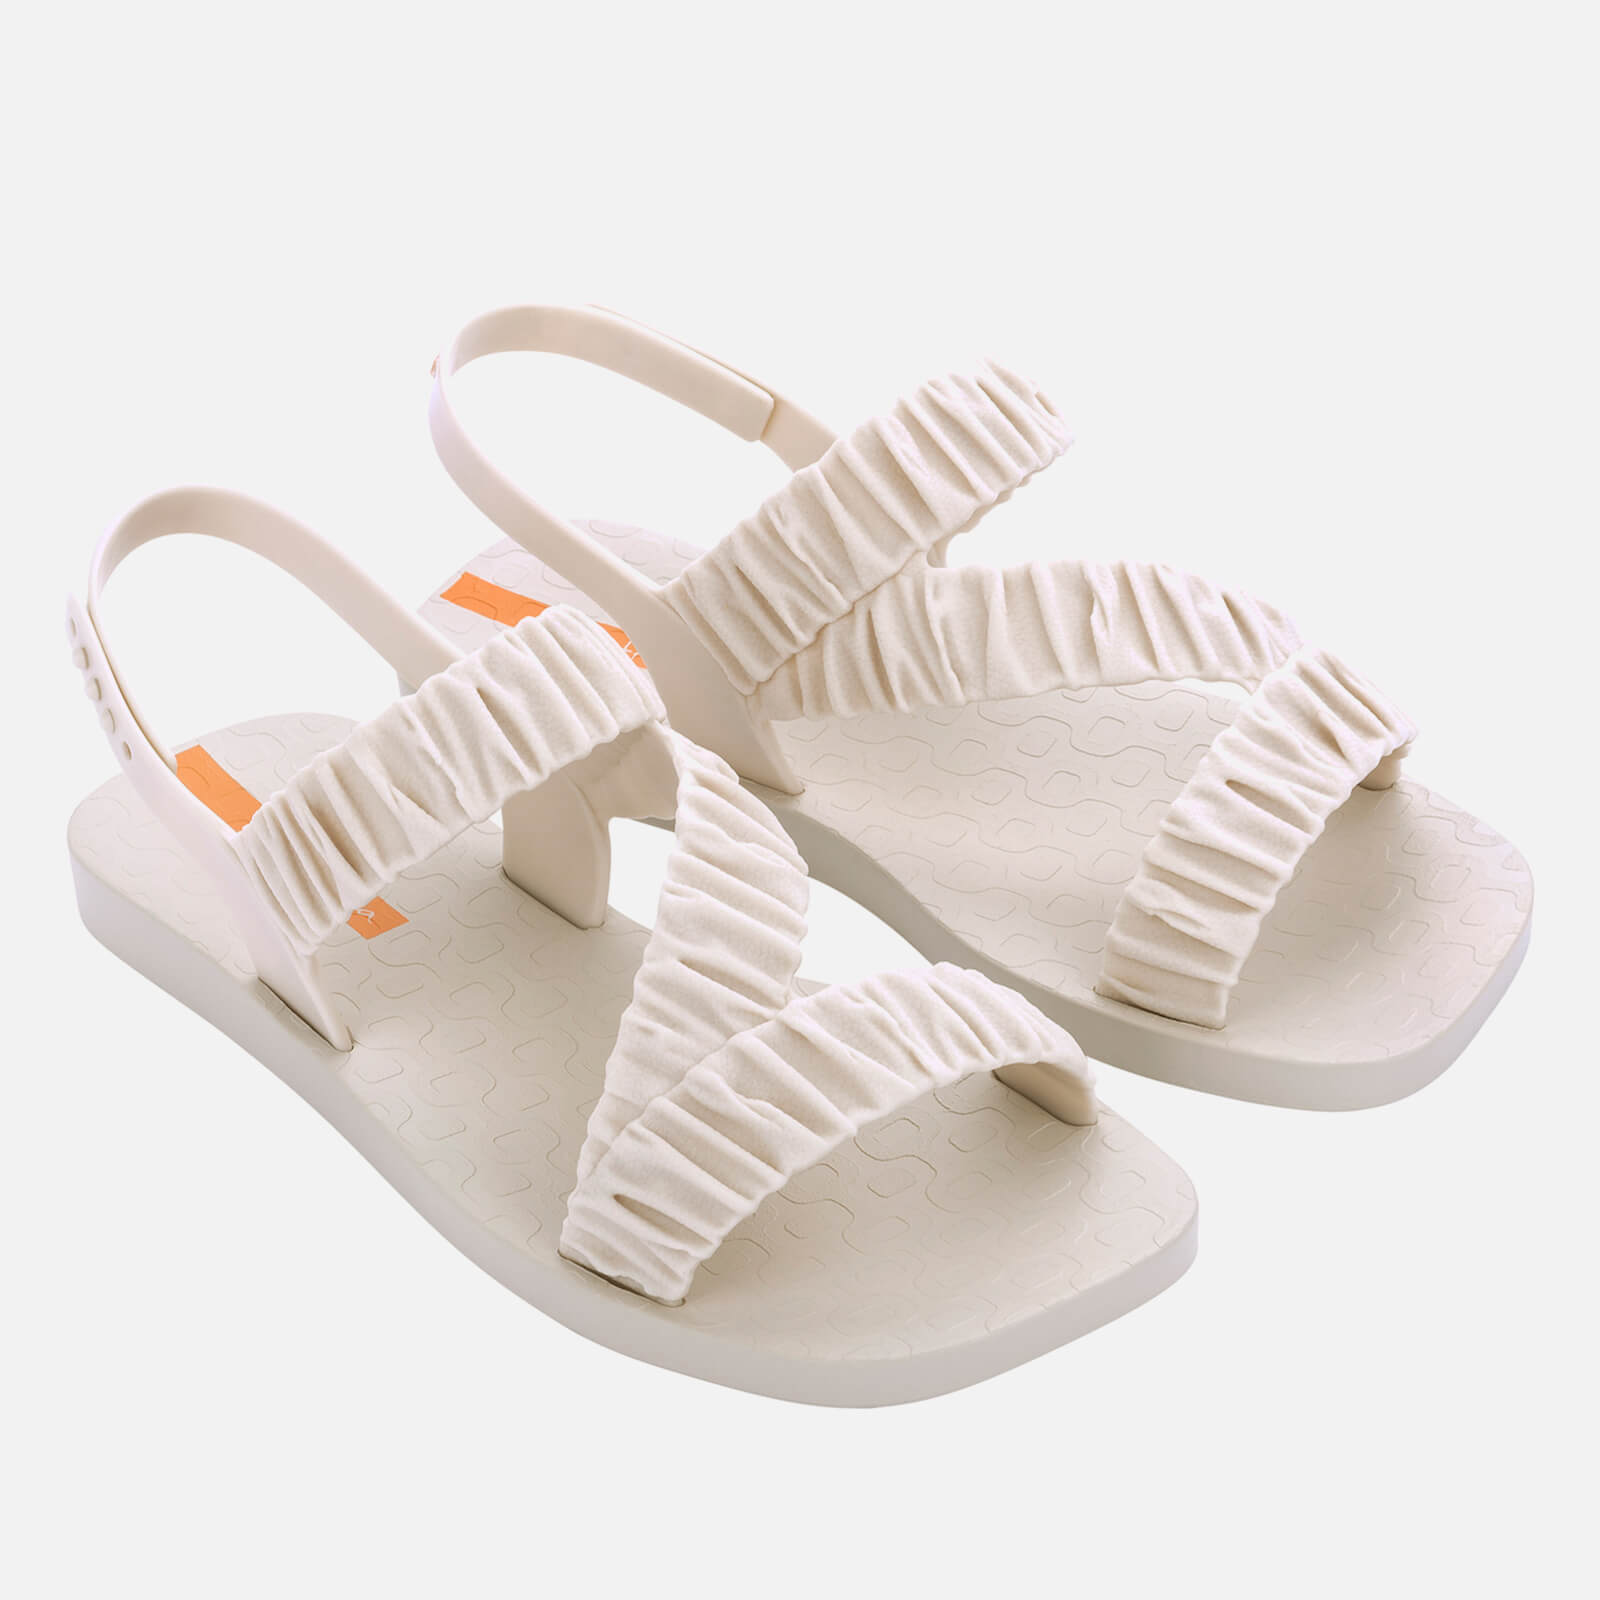 Ipanema Women’s Go Fever Rubber Sandals